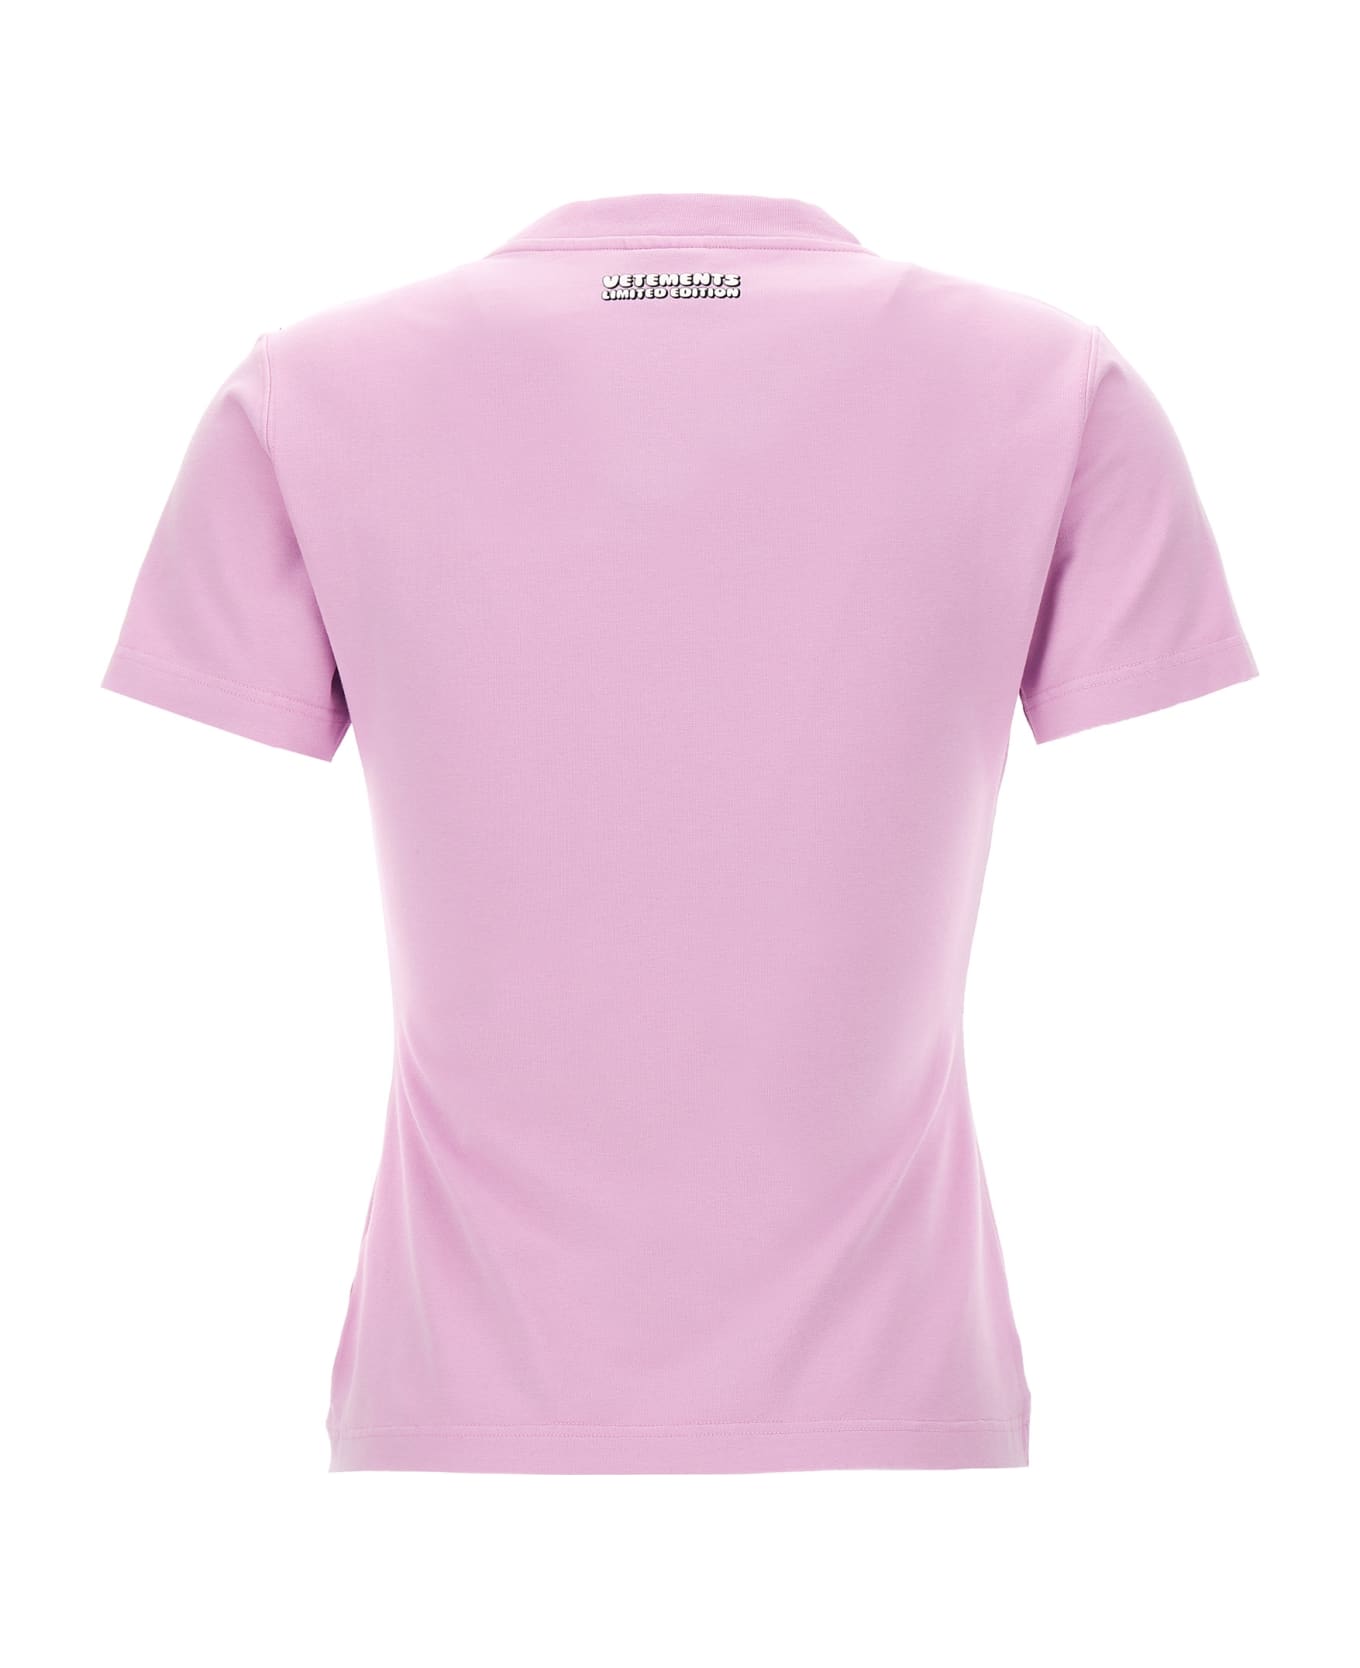 VETEMENTS 'logo' T-shirt - Pink